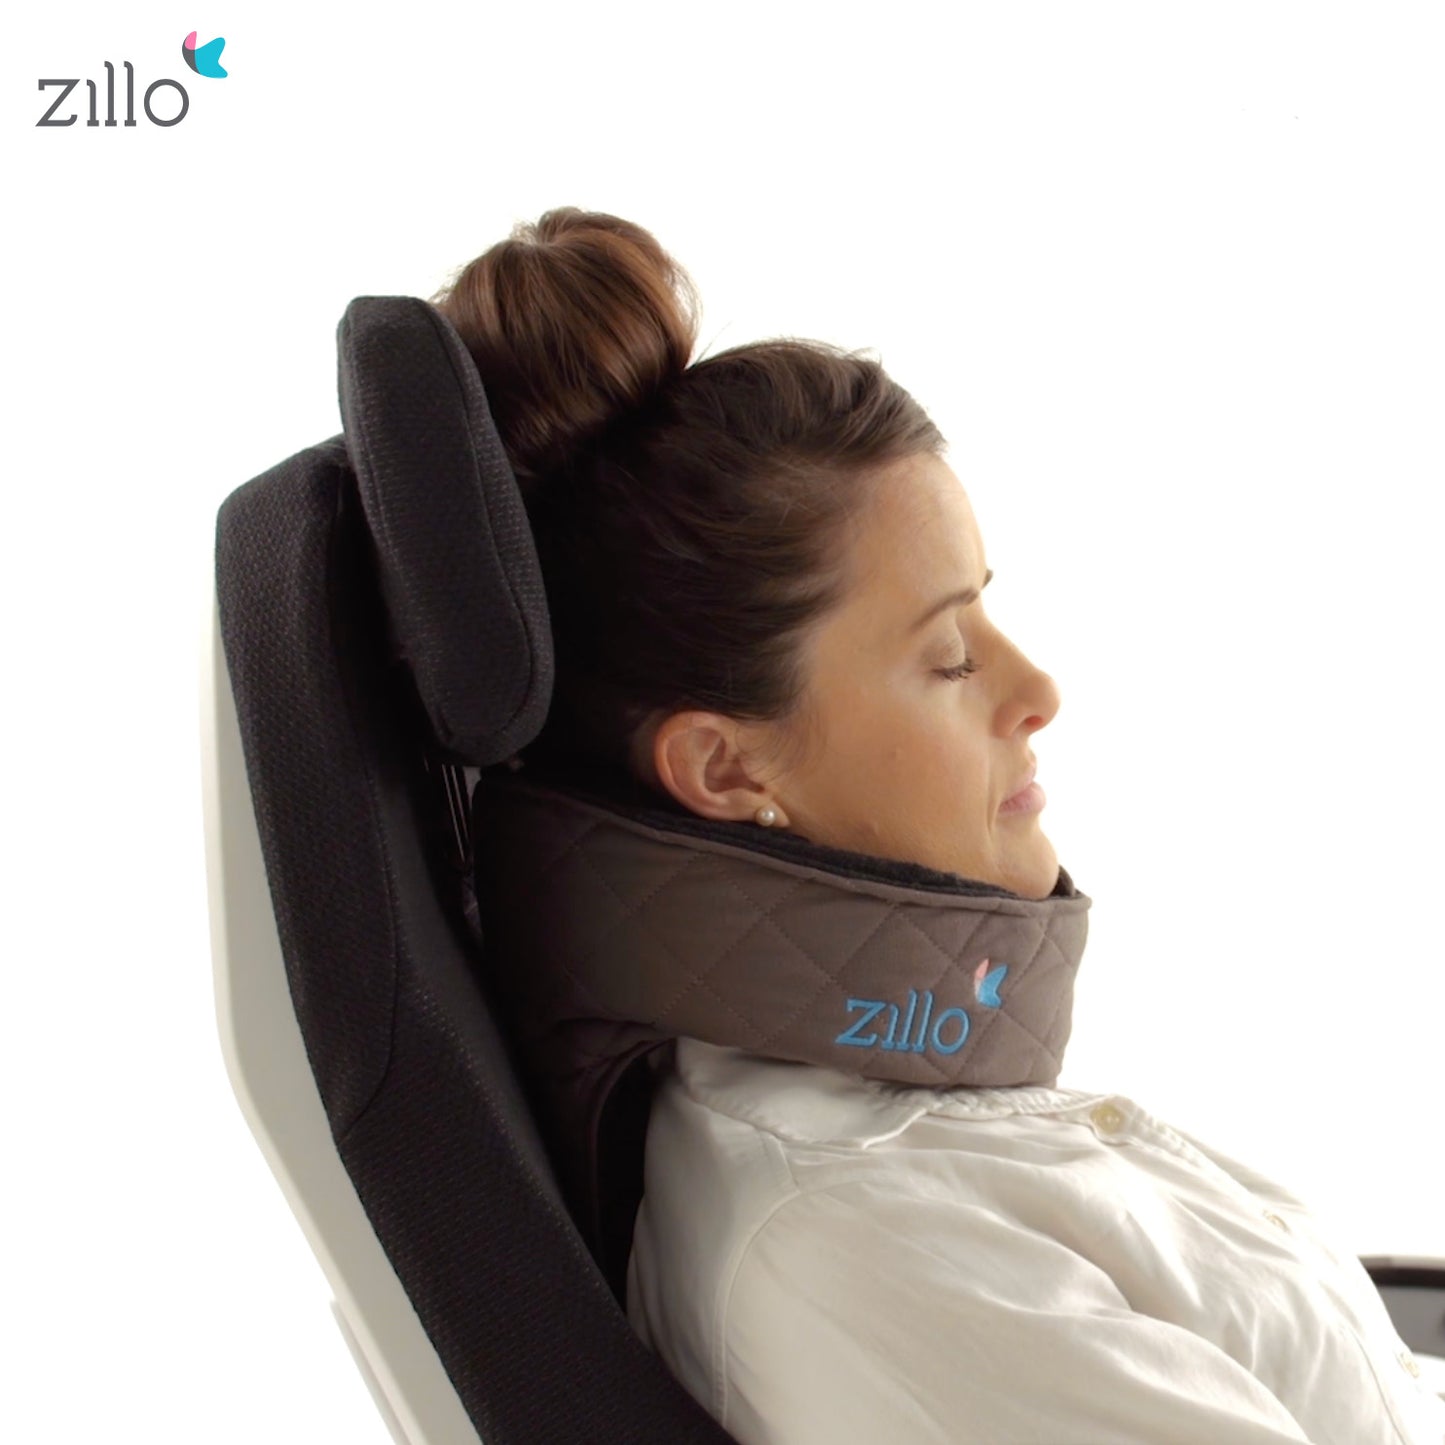 Zillo travel pillow